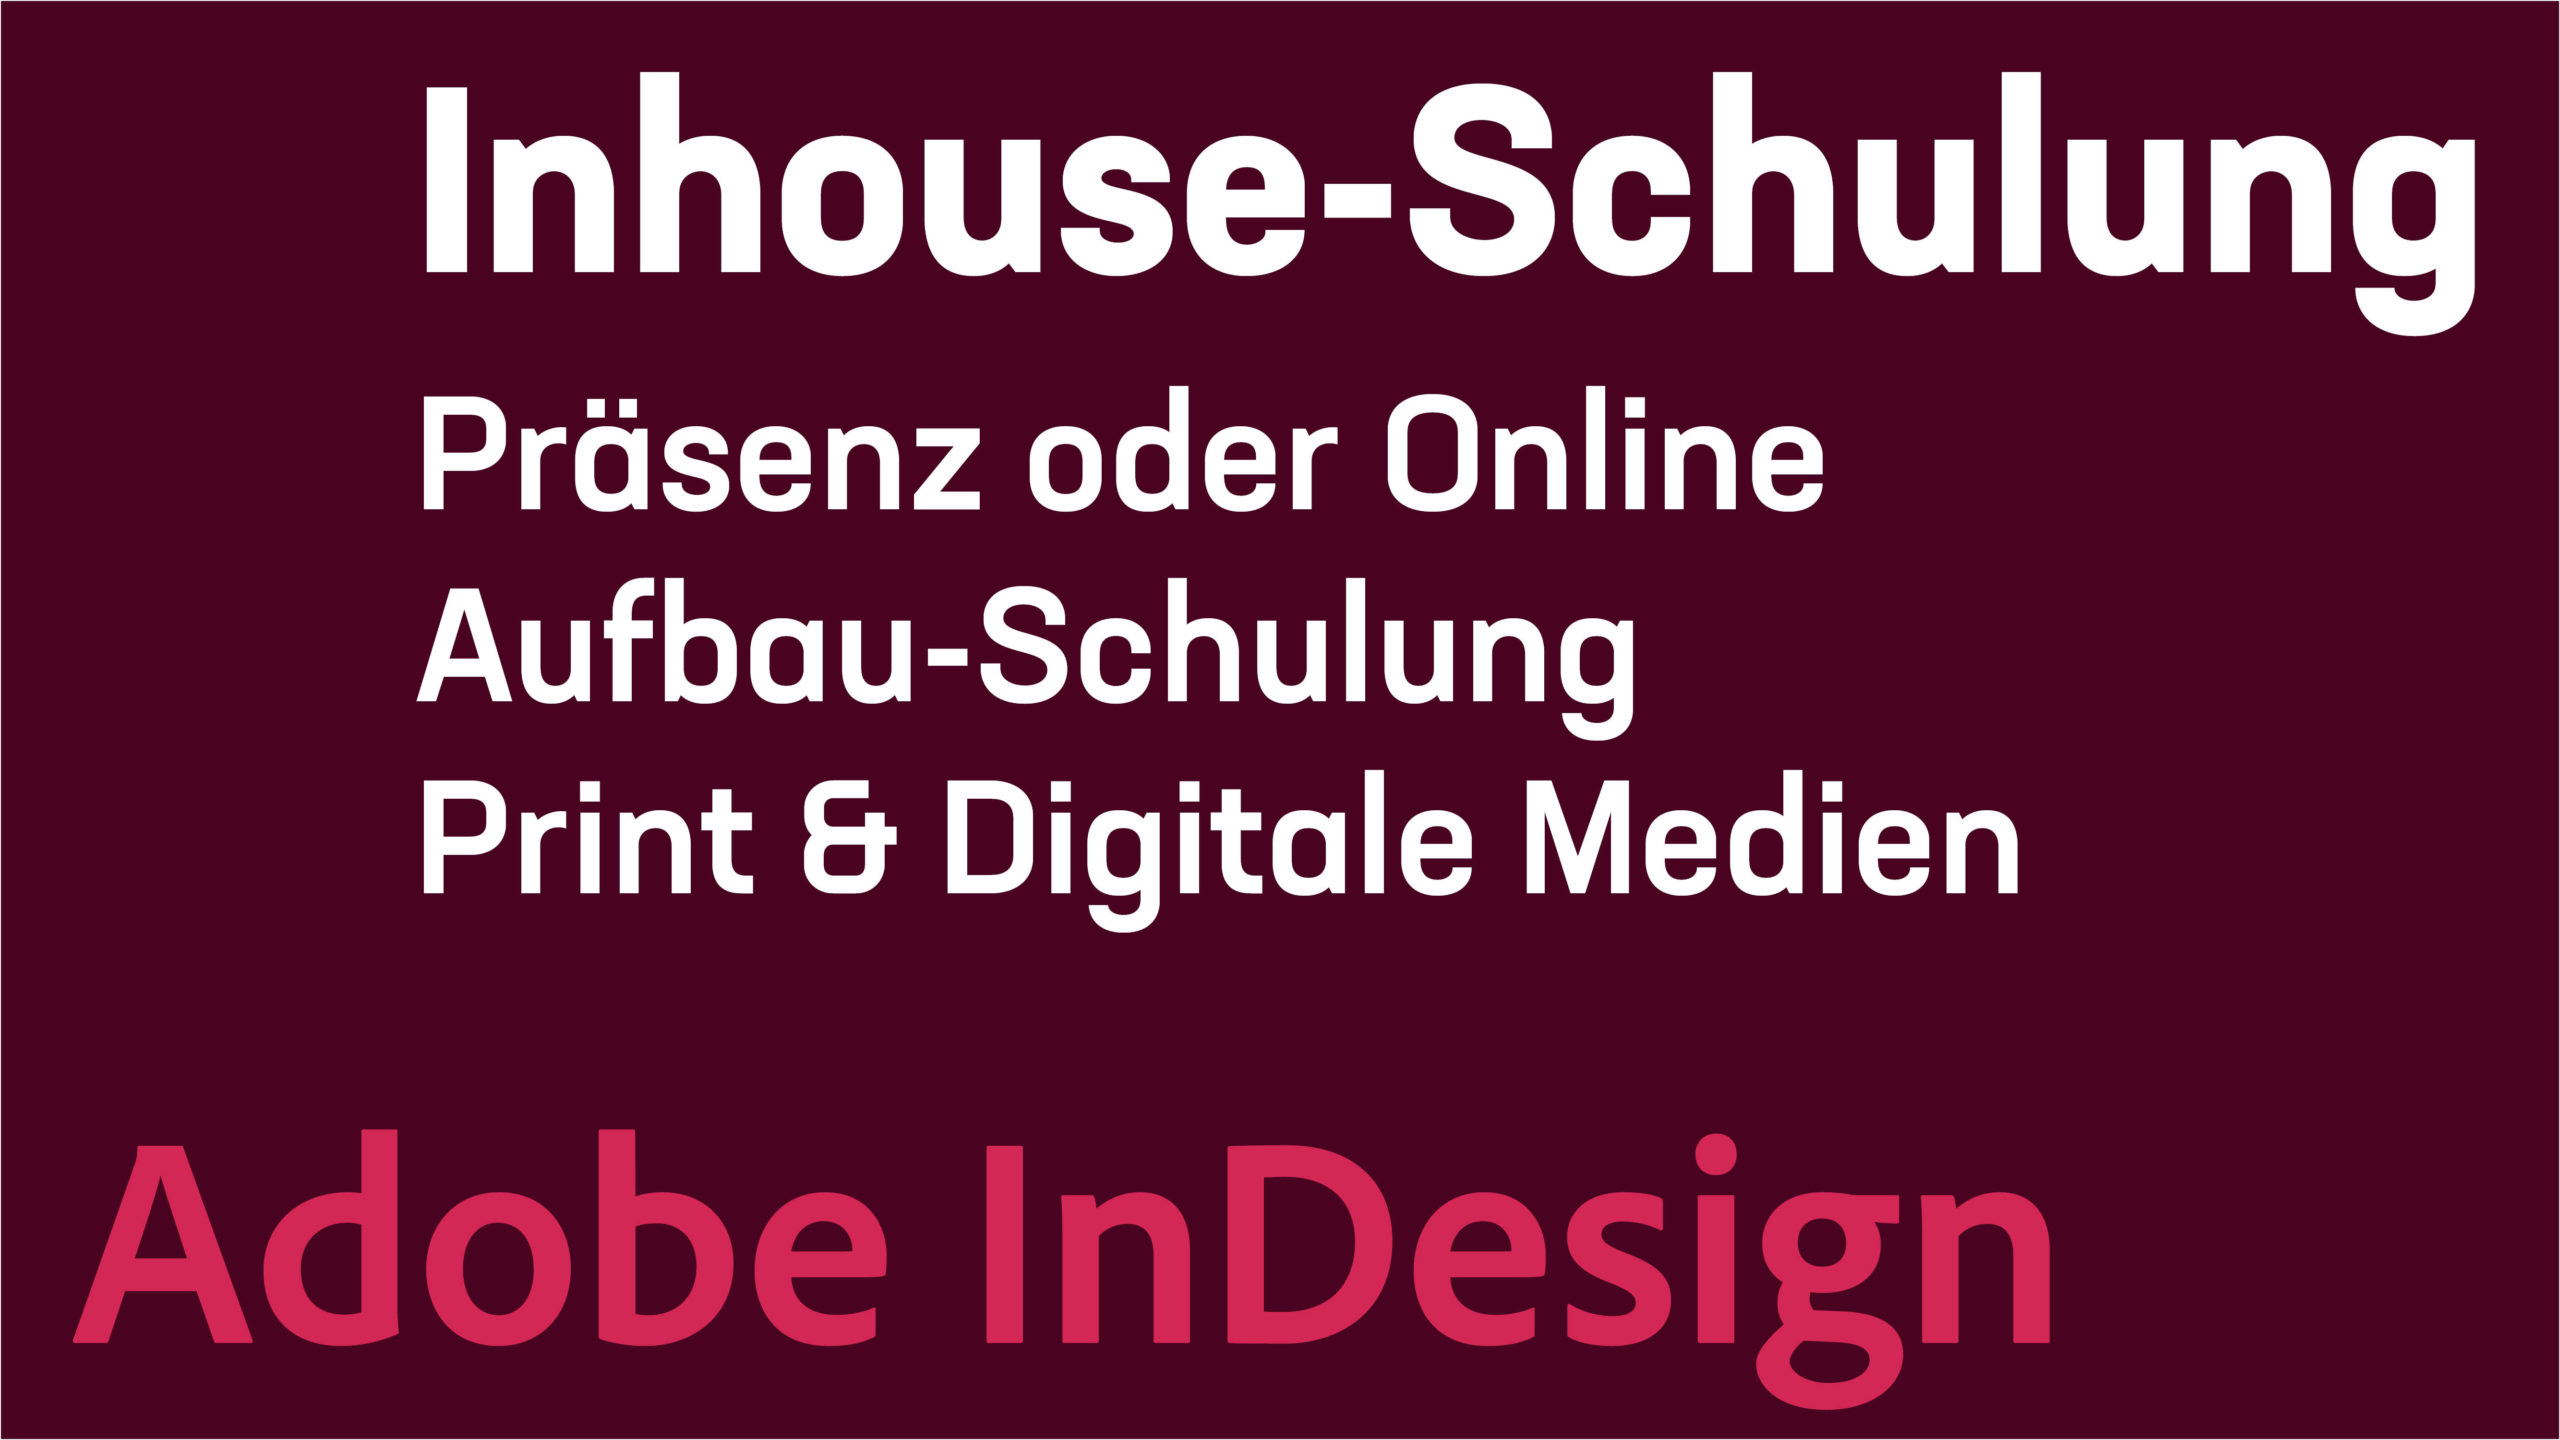 Adobe InDesign – Print & Digitale Medien gestalten - Aufbaukurs